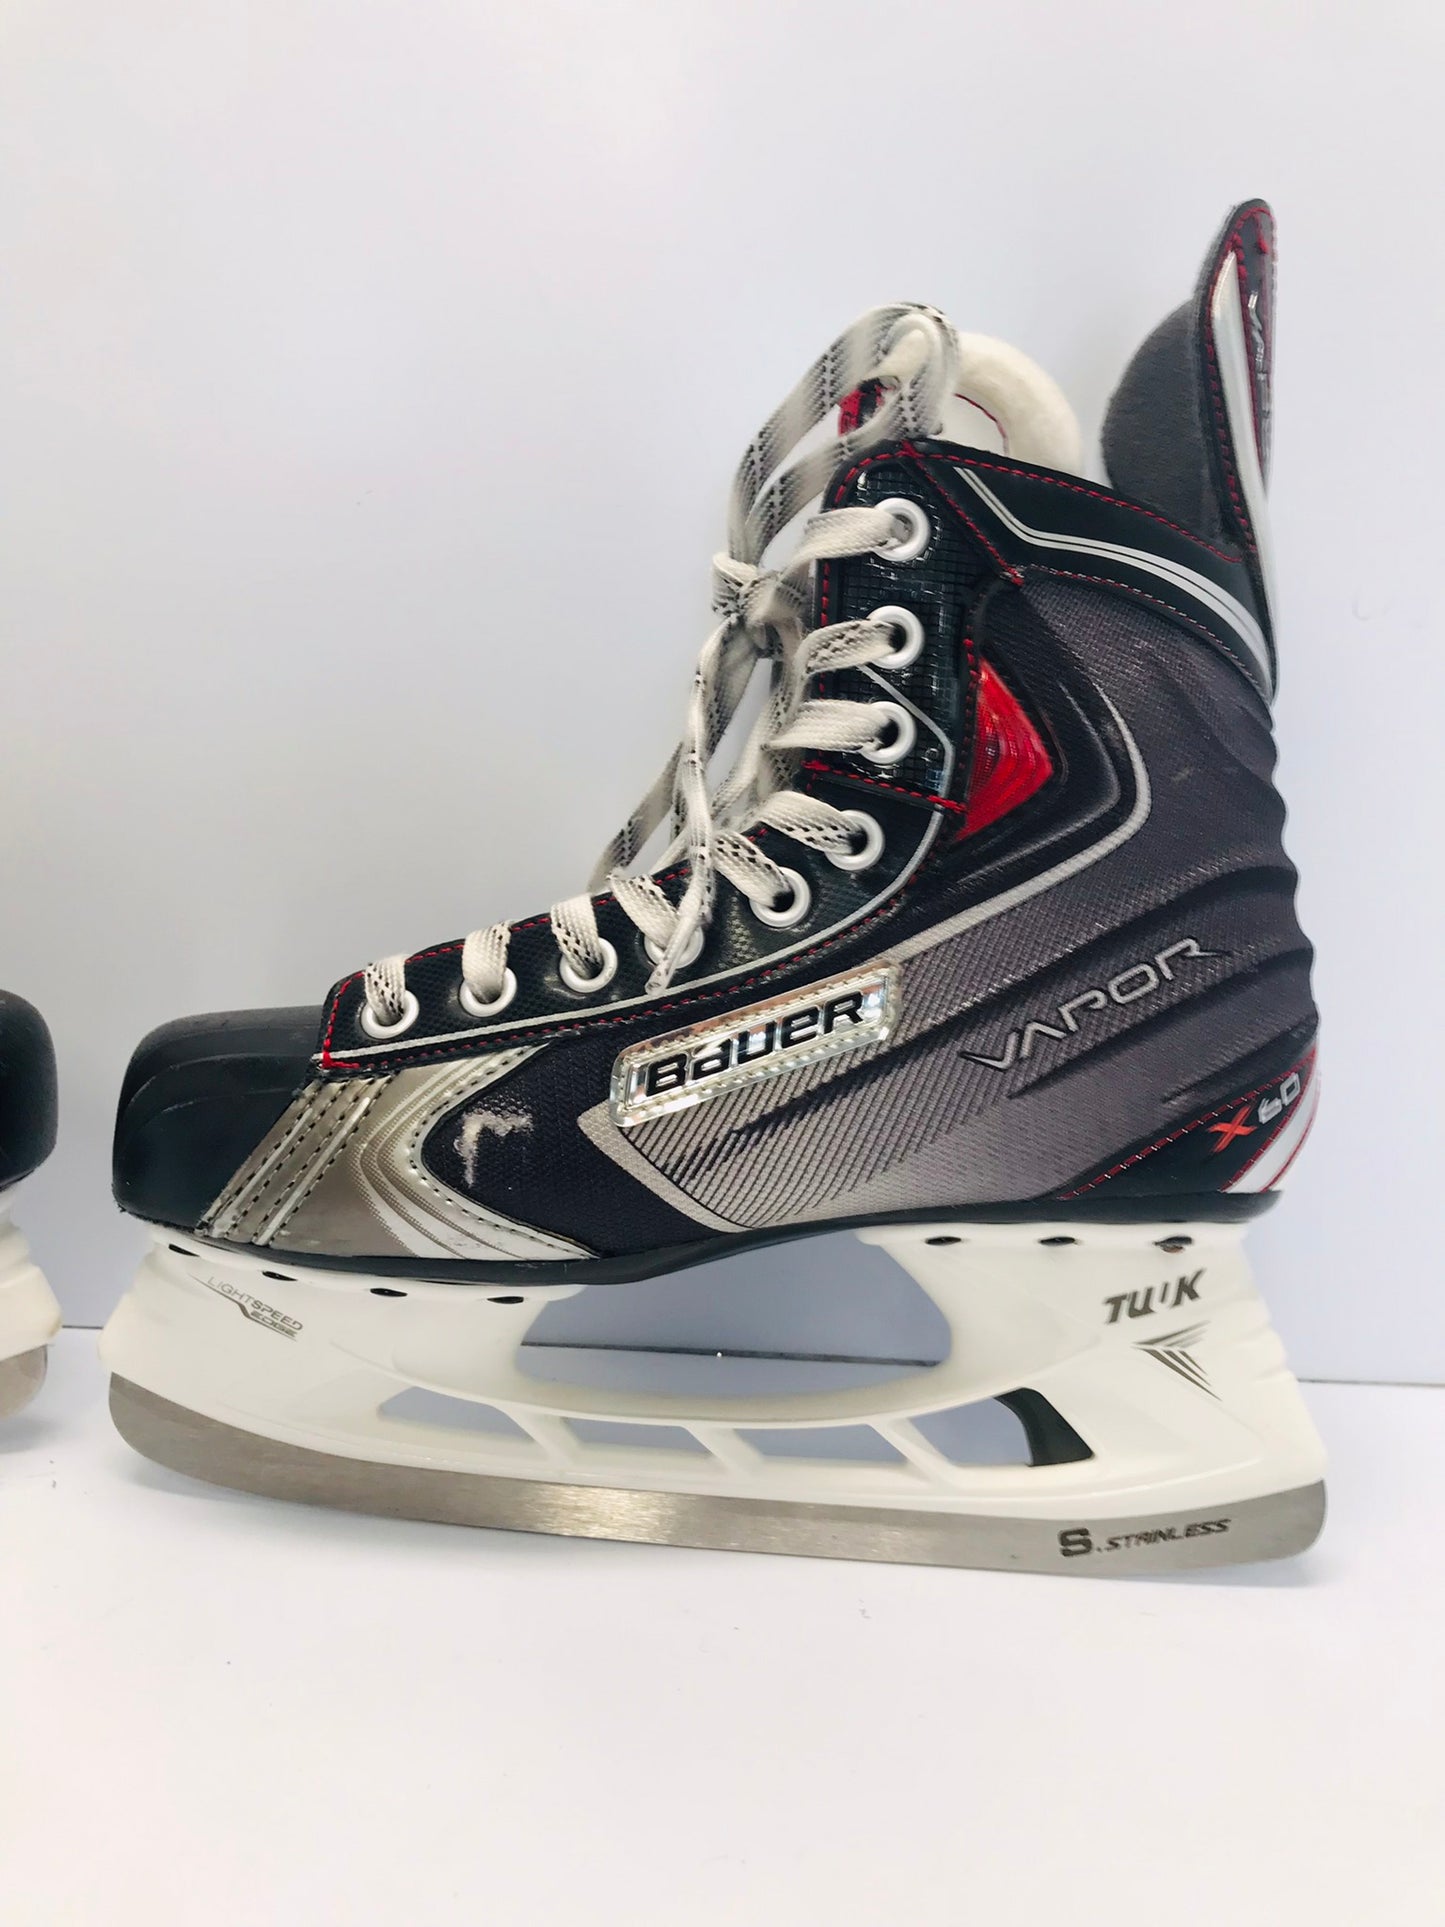 Hockey Skates Men's Size 6 Shoe 5 Skate Size Bauer Vapor X60 Like New